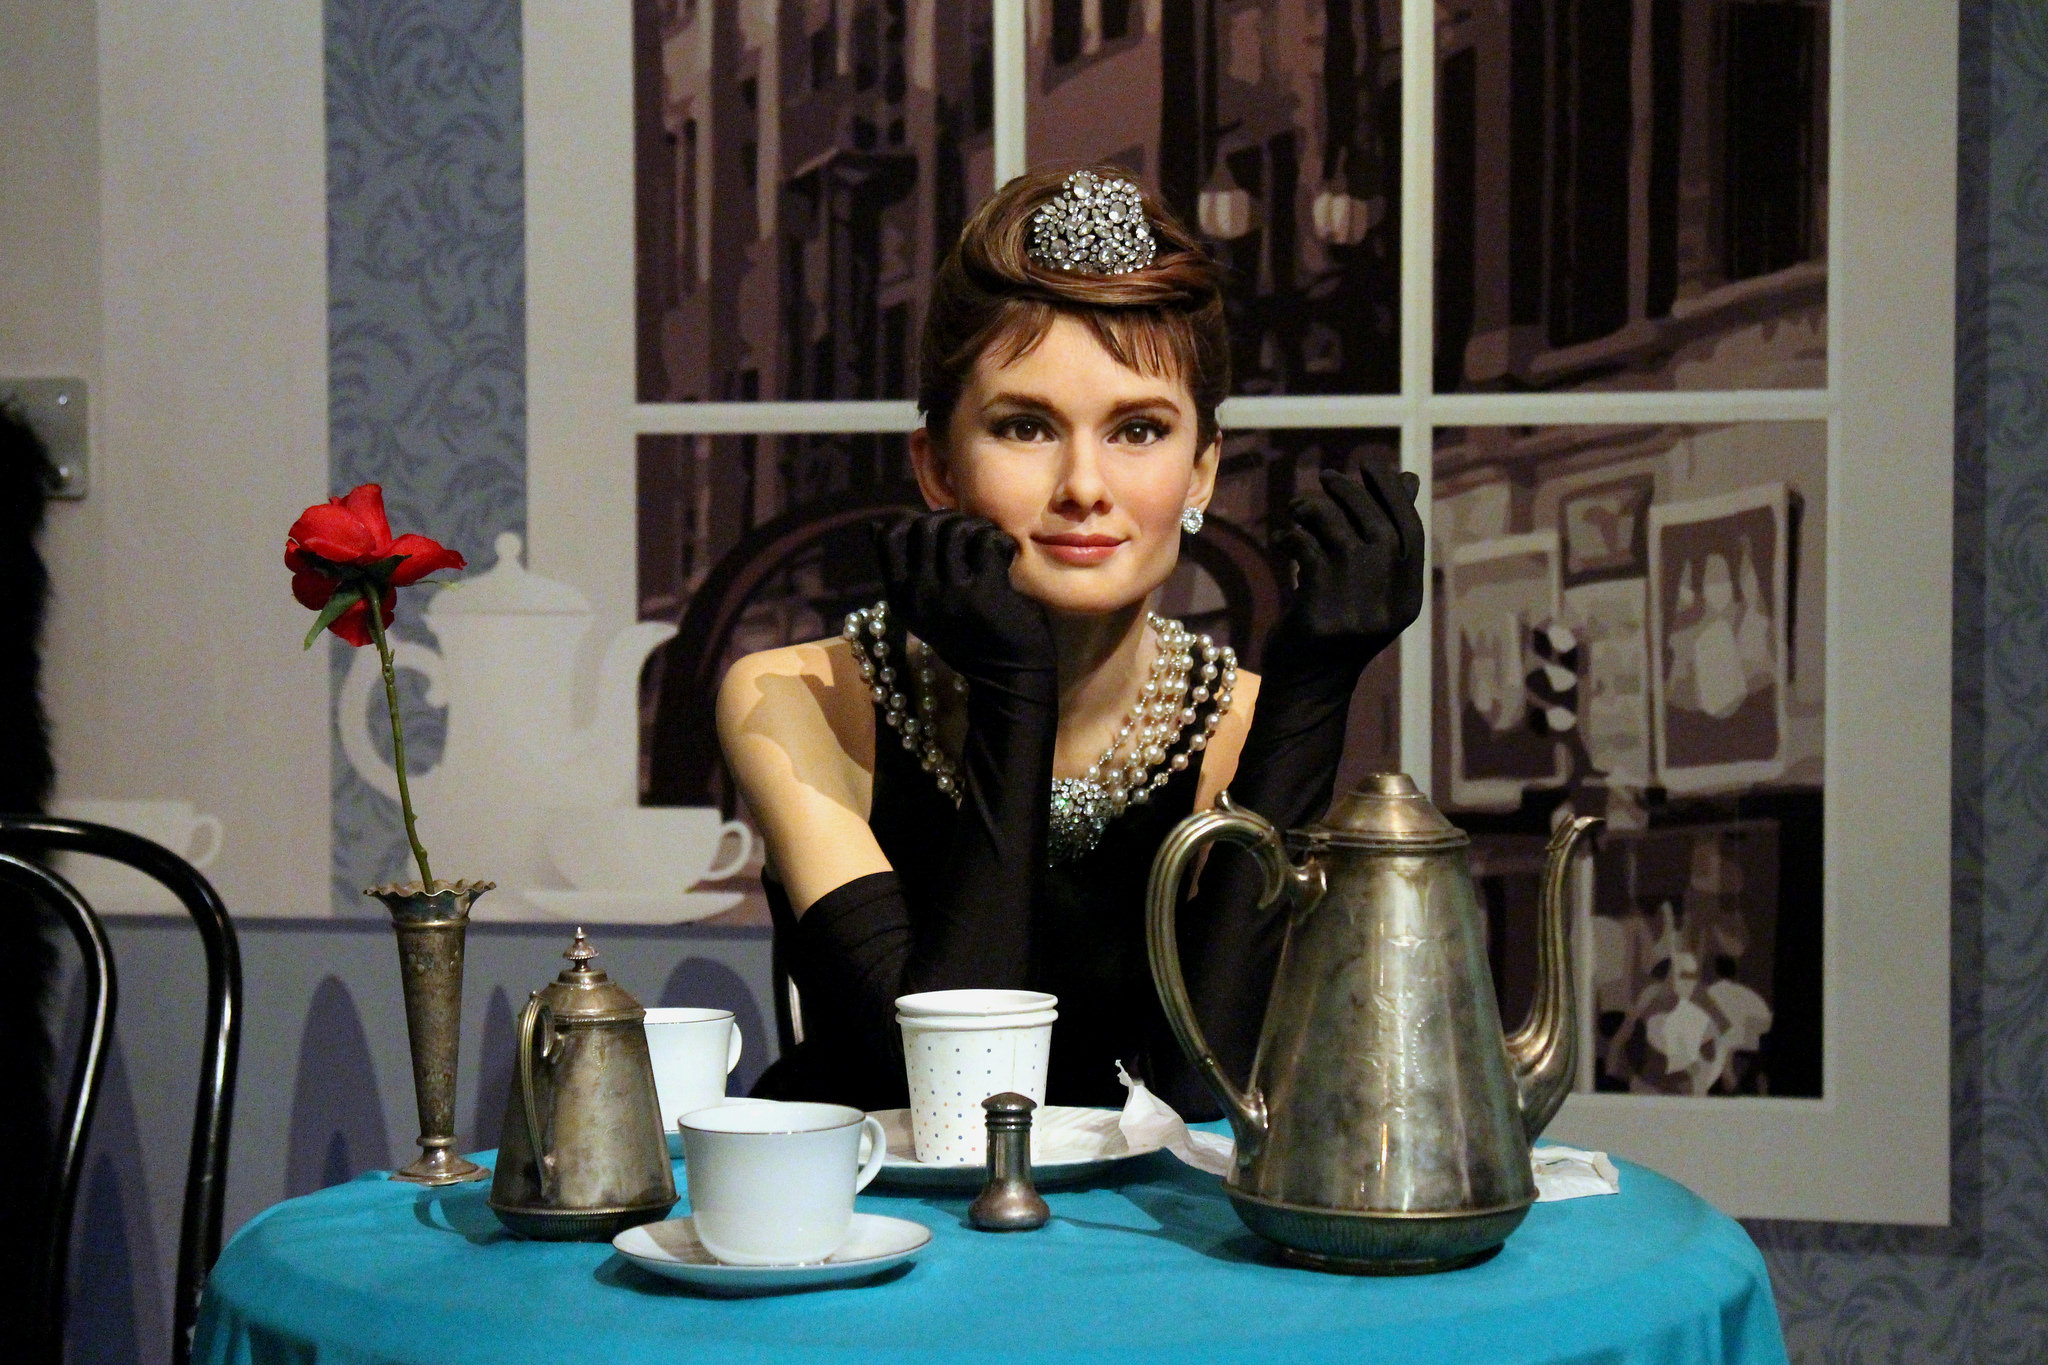 Завтрак у тиффани музыка. Одри Хепберн завтрак у Тиффани. Завтрак у Тиффани (1961). “Breakfast at Tiffany's” Энджи Диксон. Чаепитие у Тиффани.